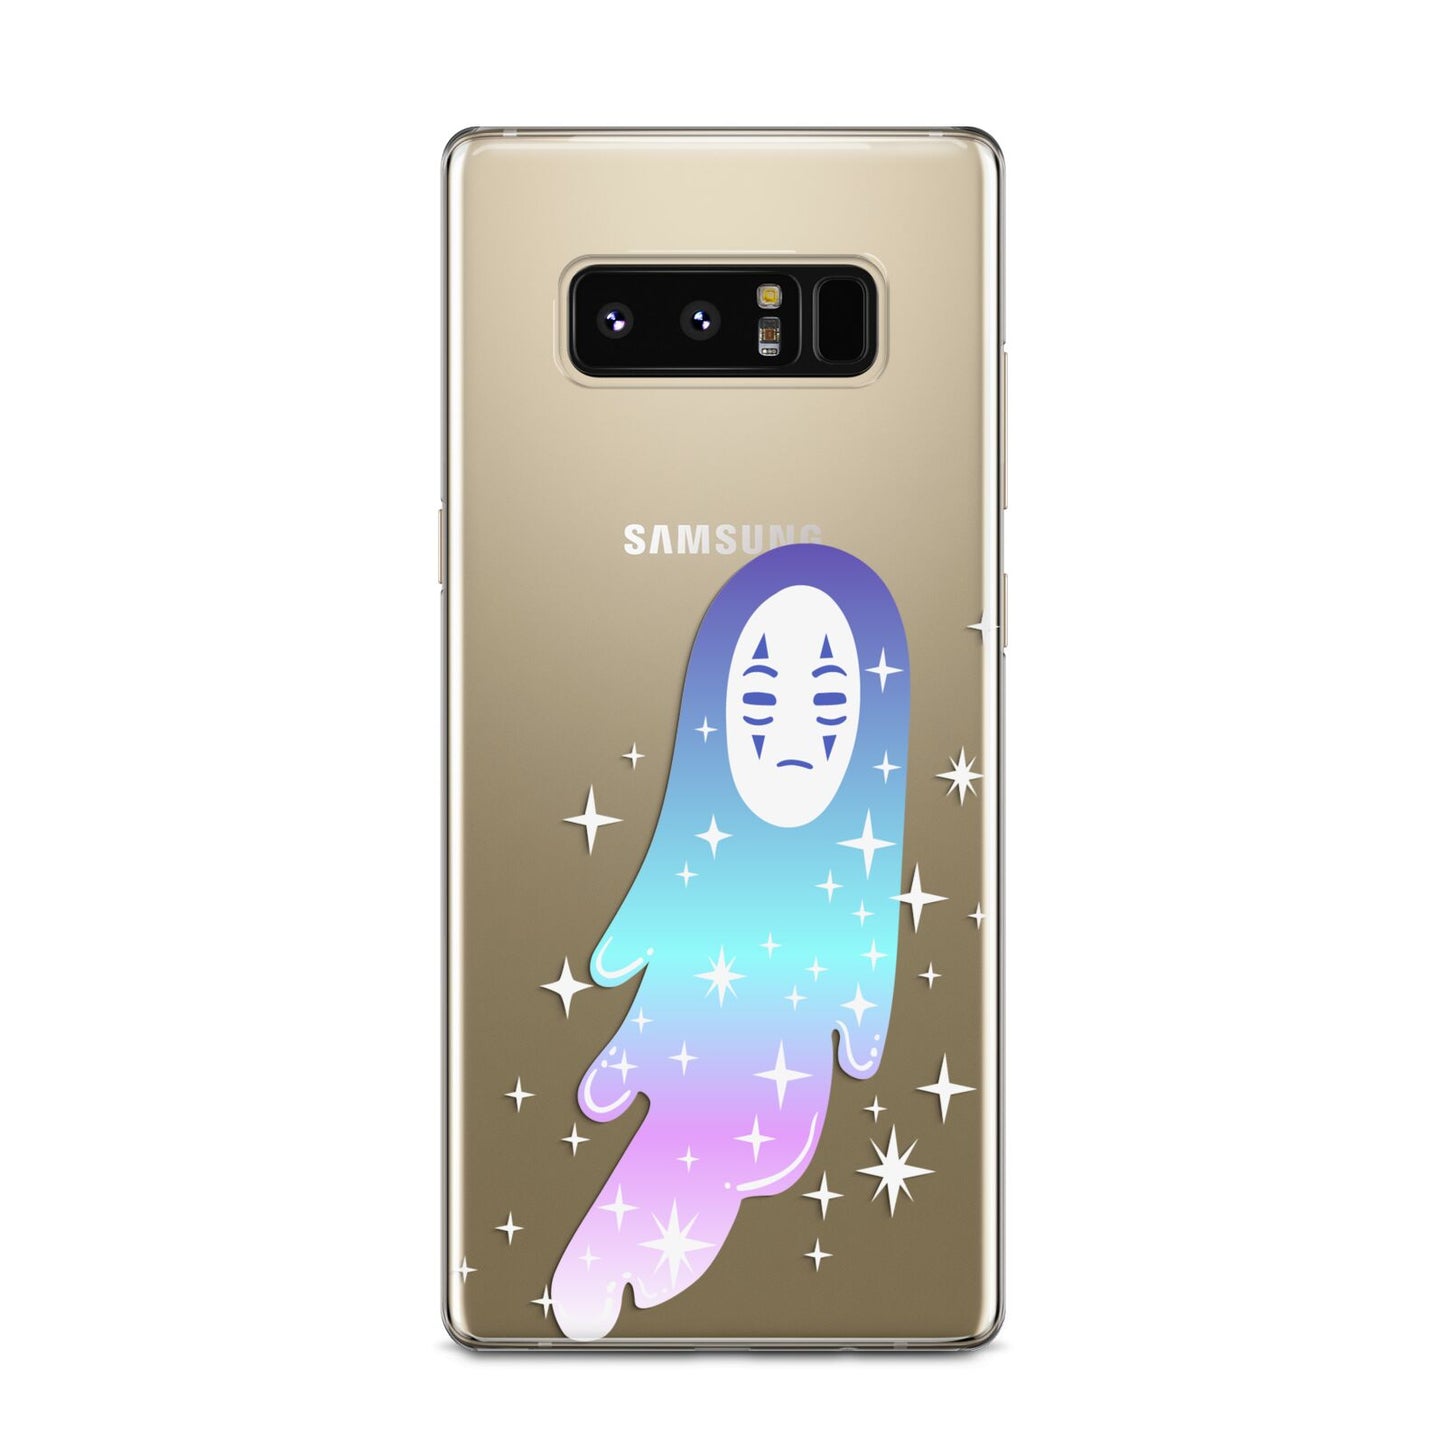 Starry Spectre Samsung Galaxy Note 8 Case